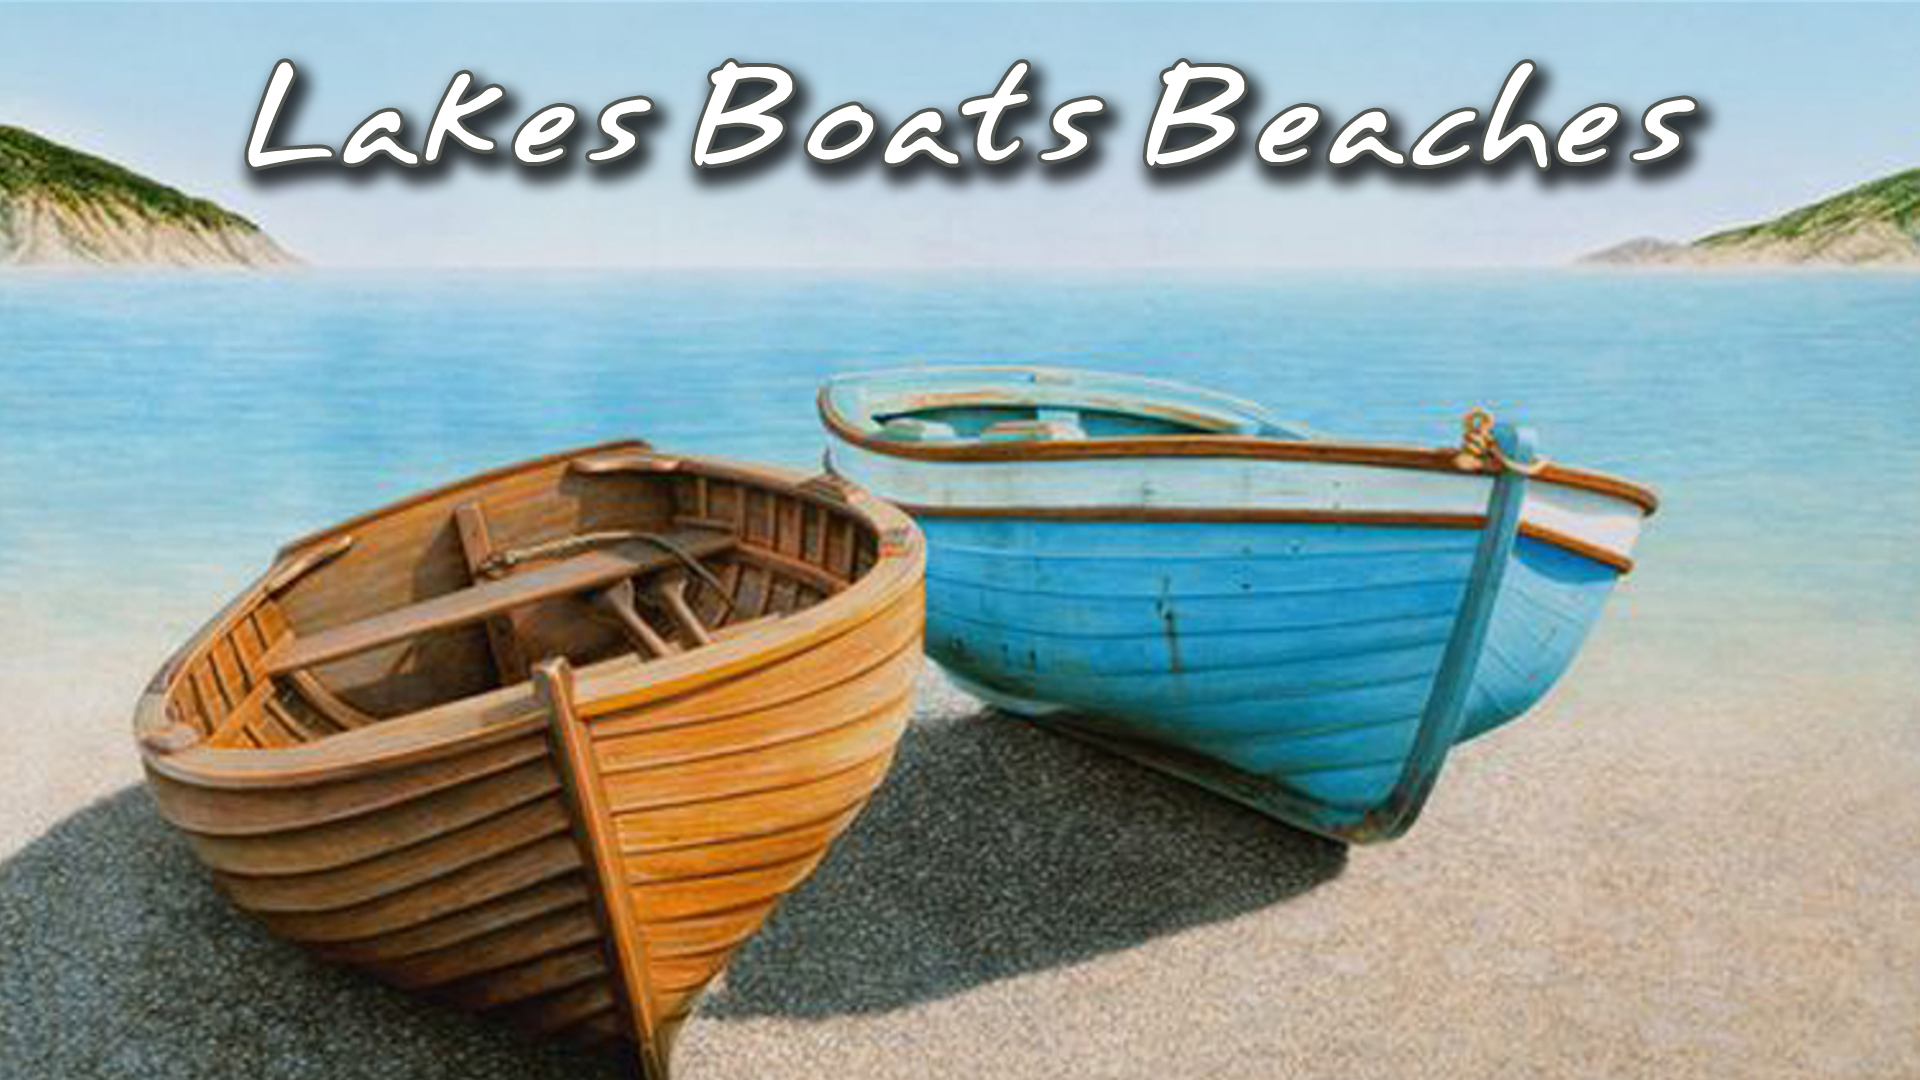 Lakes Boats Beaches – Gift of faith